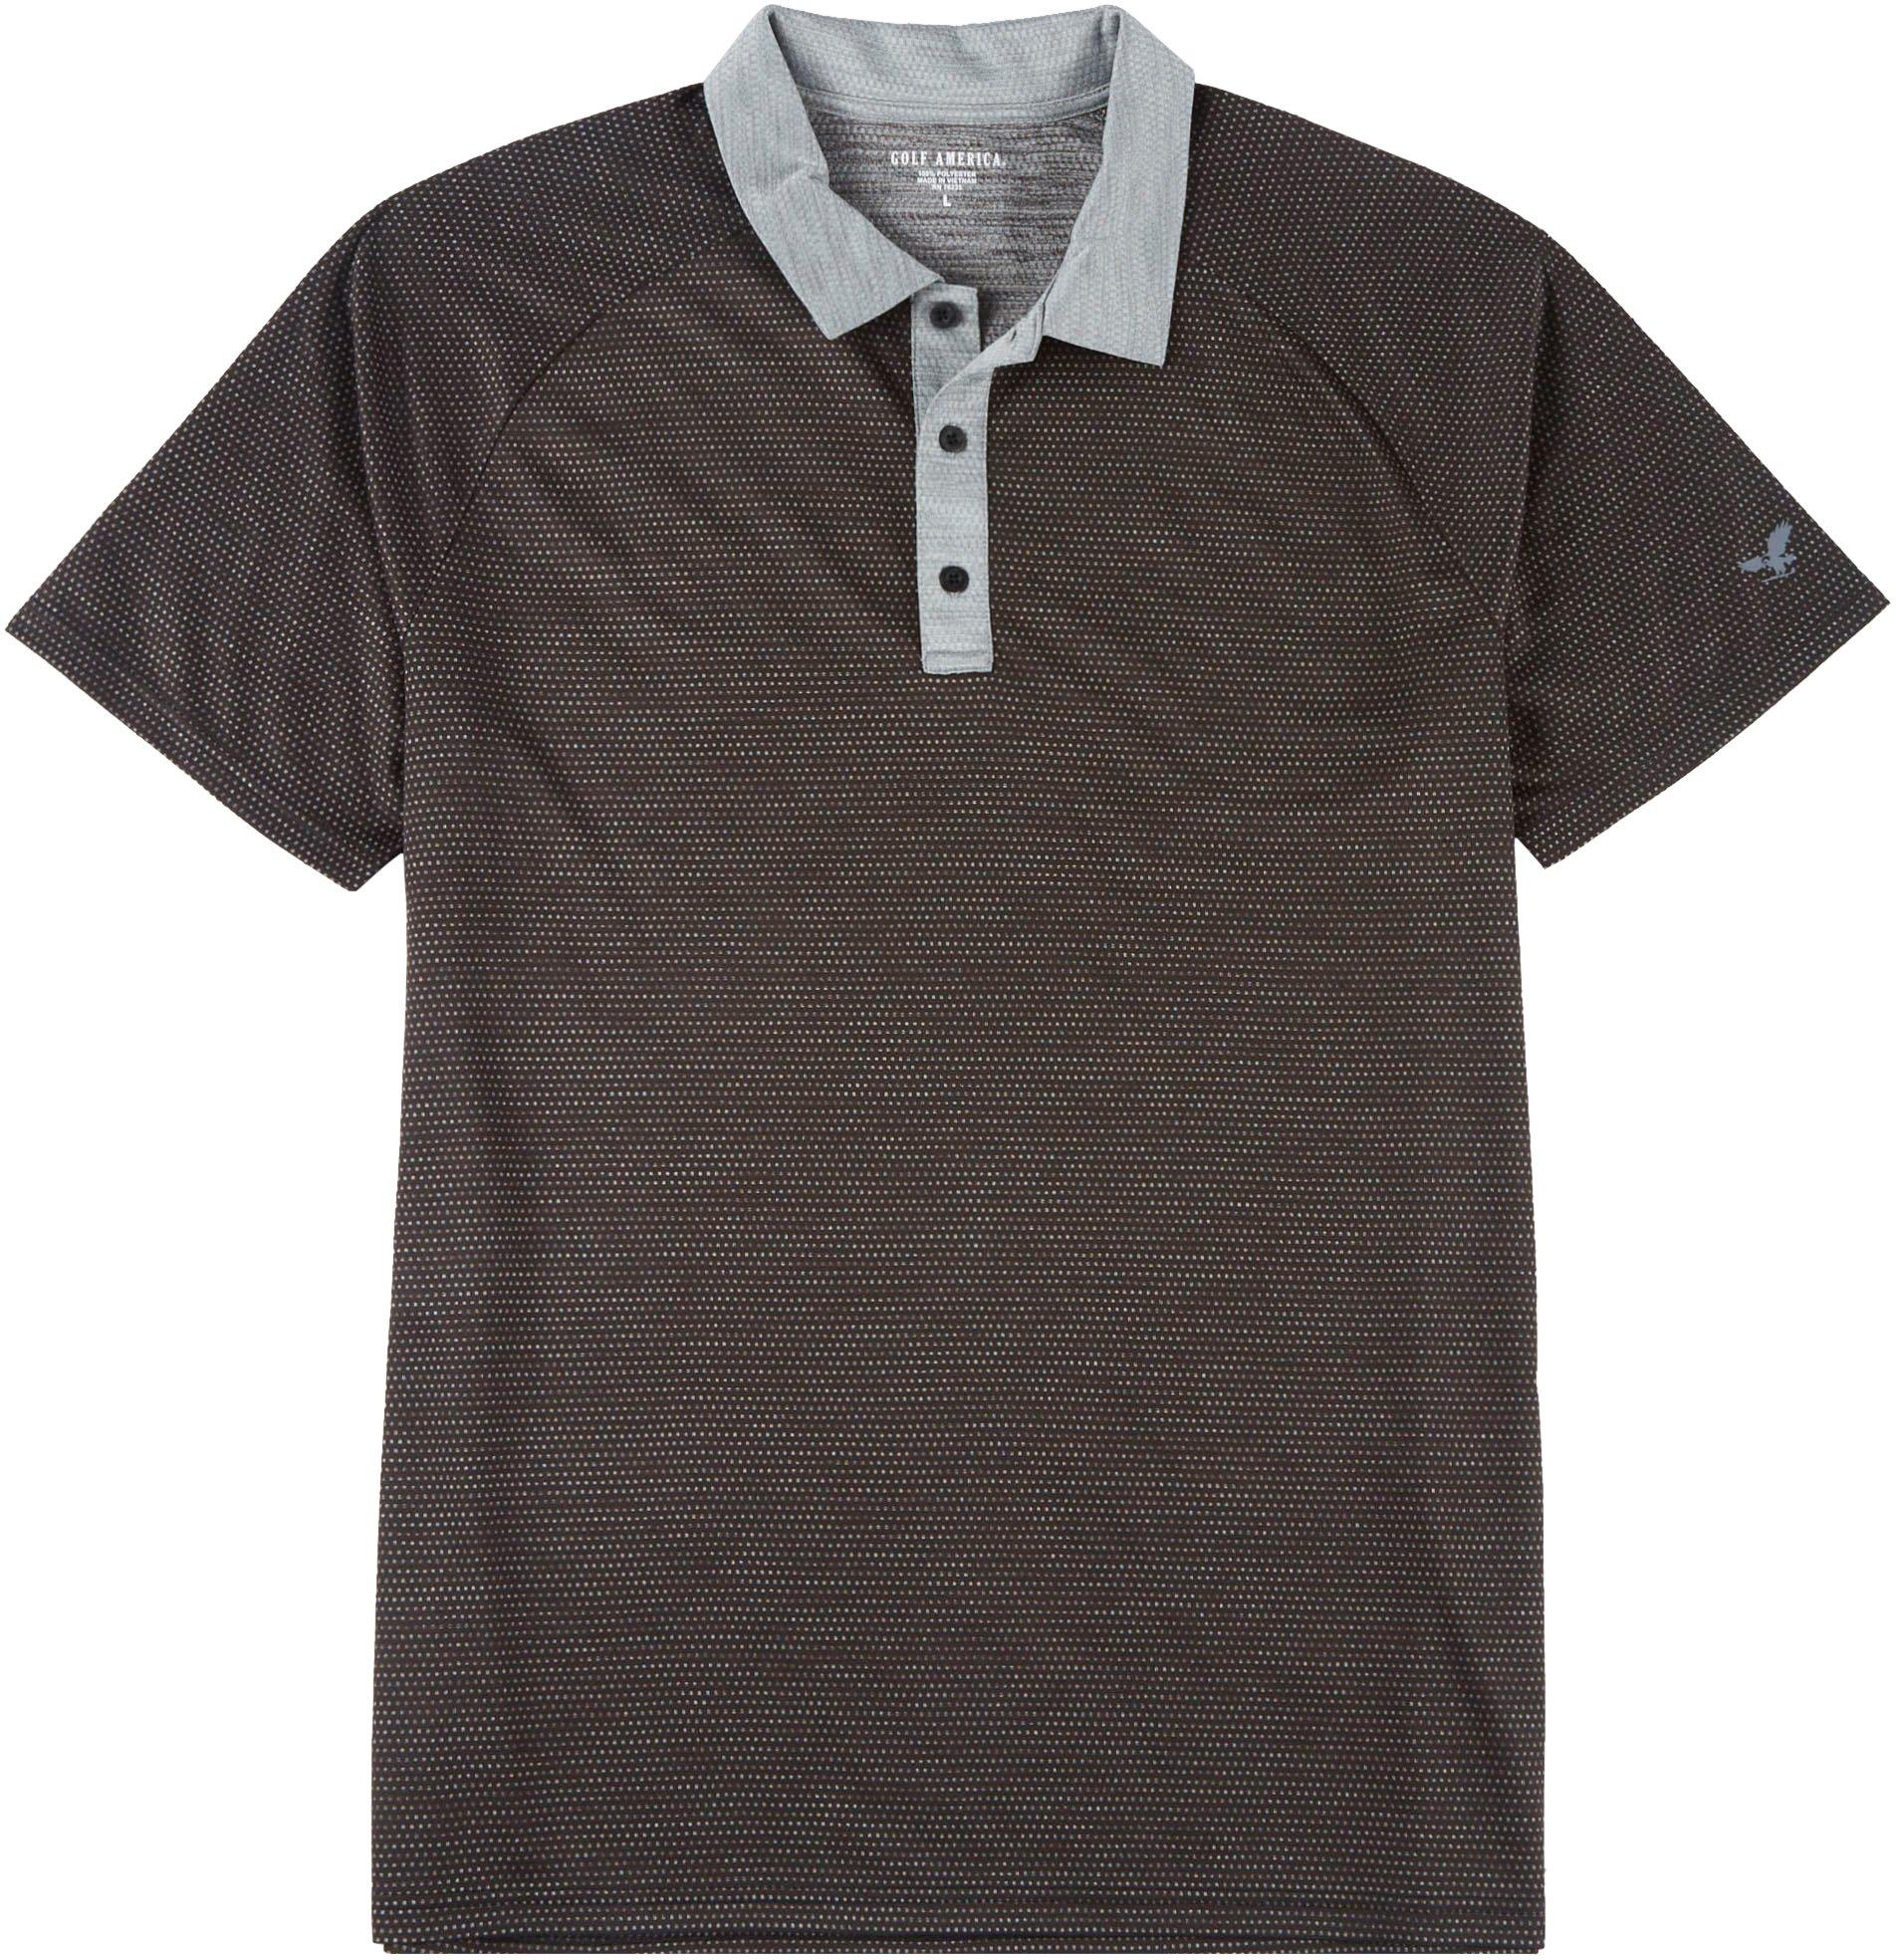 Golf America Mens Dualside Dotted Print Polo Shirt | eBay